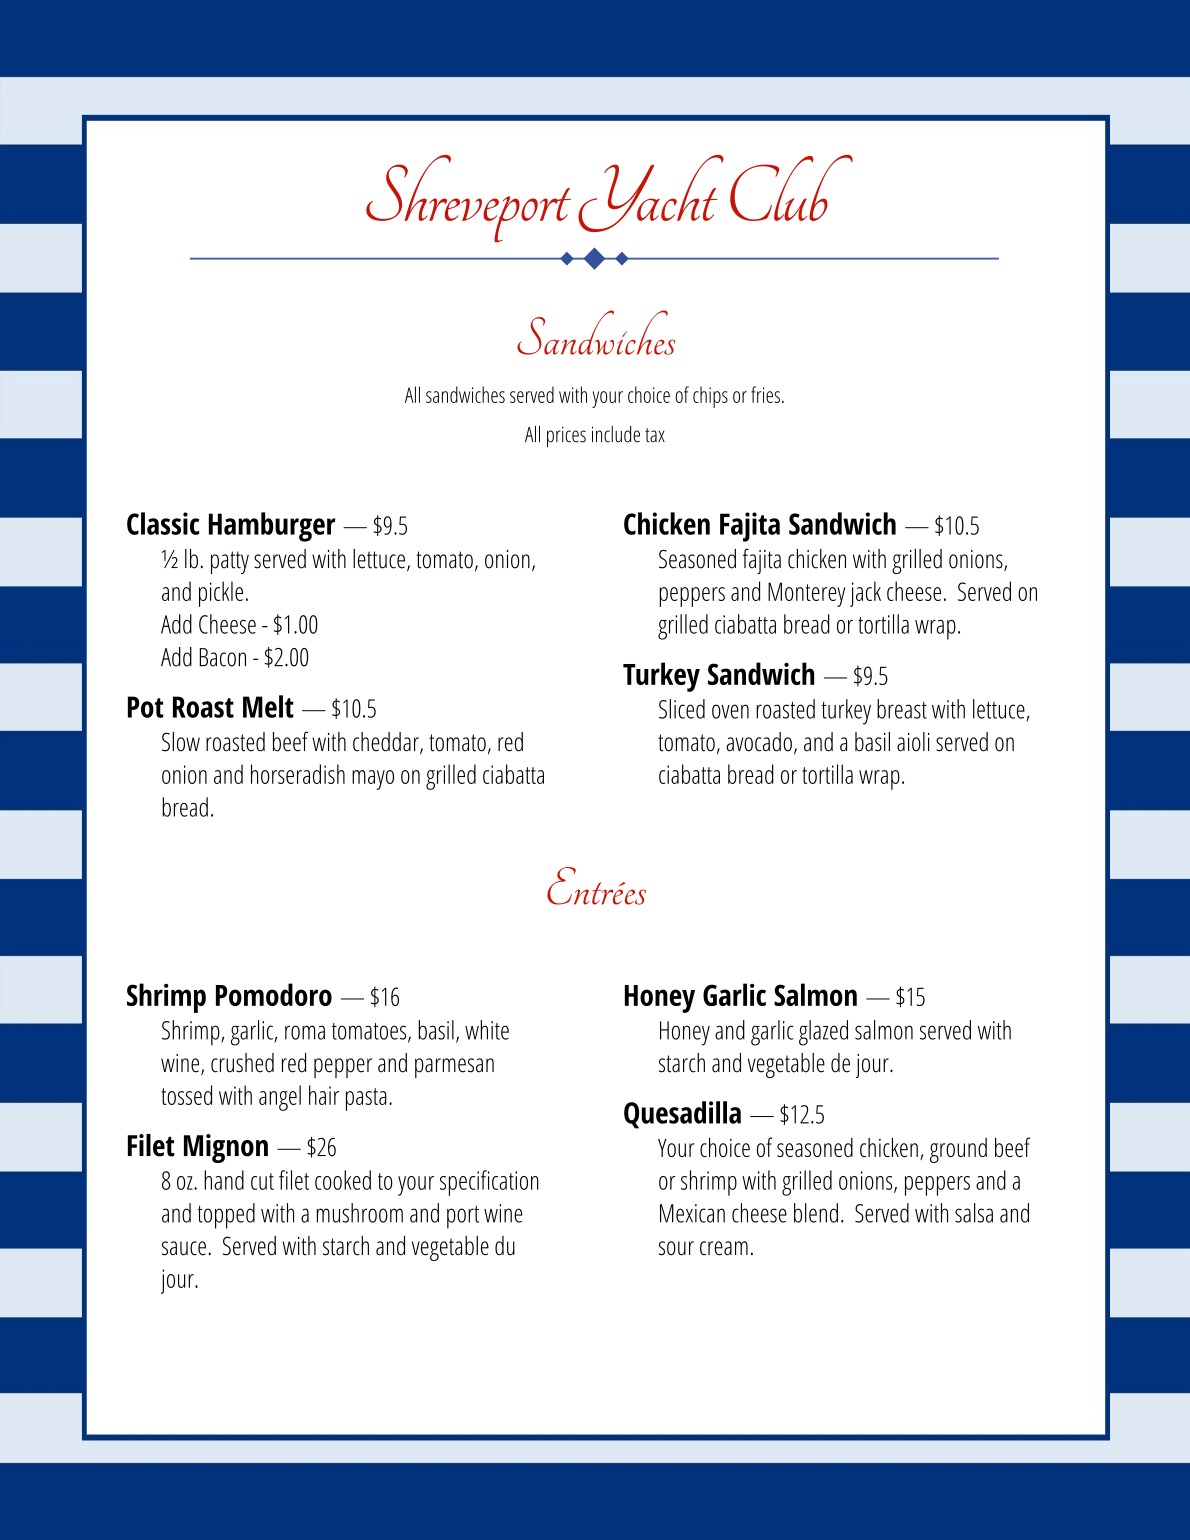 royal southern yacht club menu